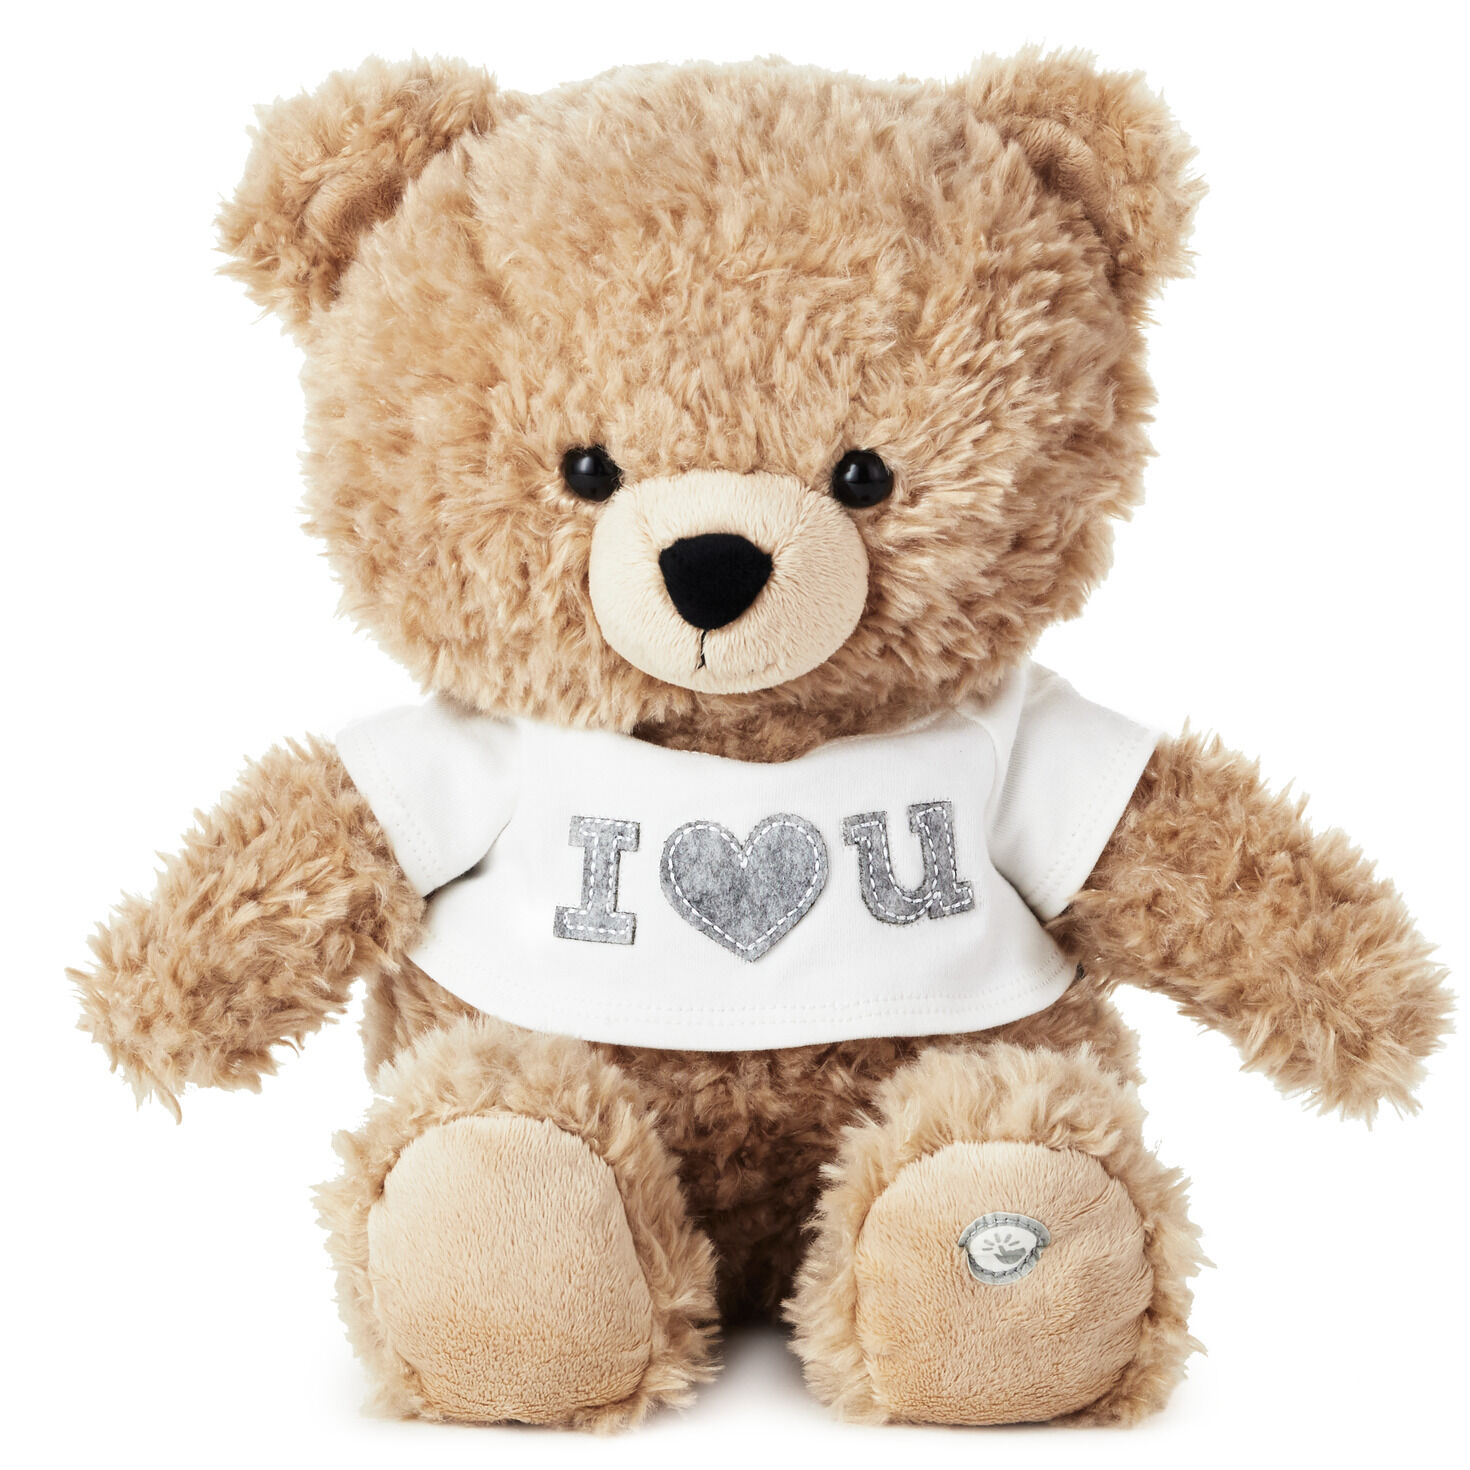 Blue Teddy Bears Small Cute And Cuddly NEW Gift Present Birthday Xmas 